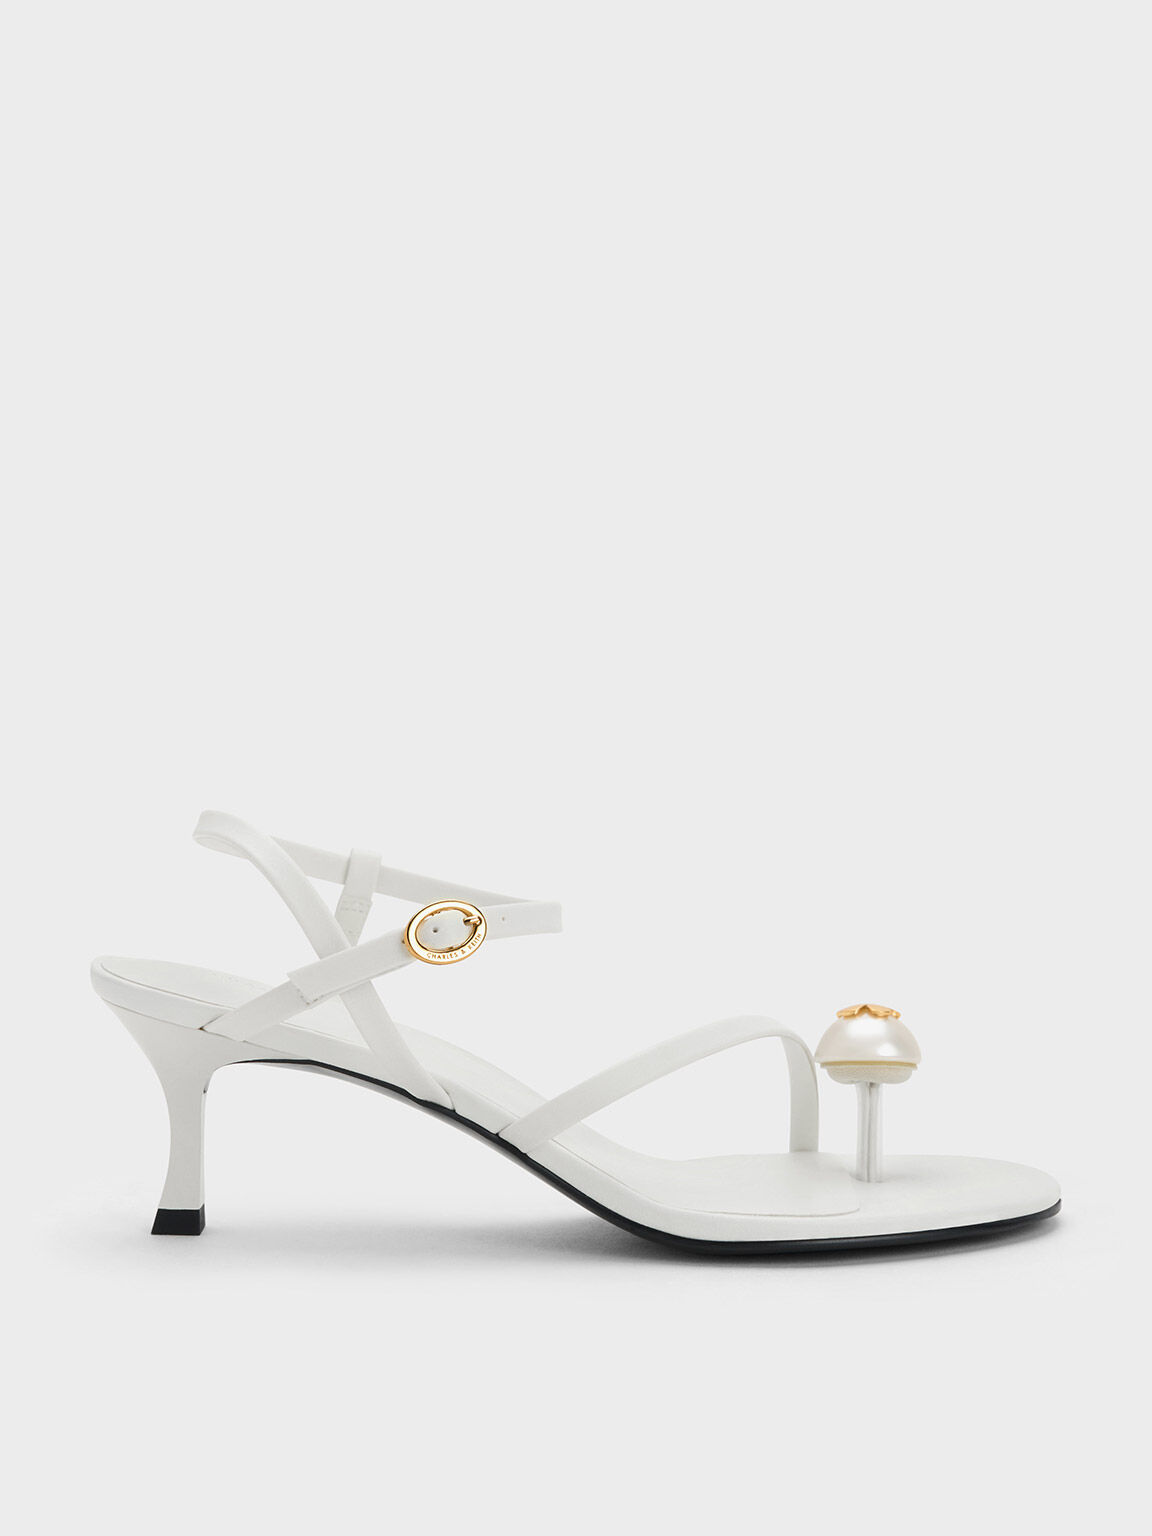 ASOS DESIGN Fabricate pearl embellished mule sandals in white | ASOS